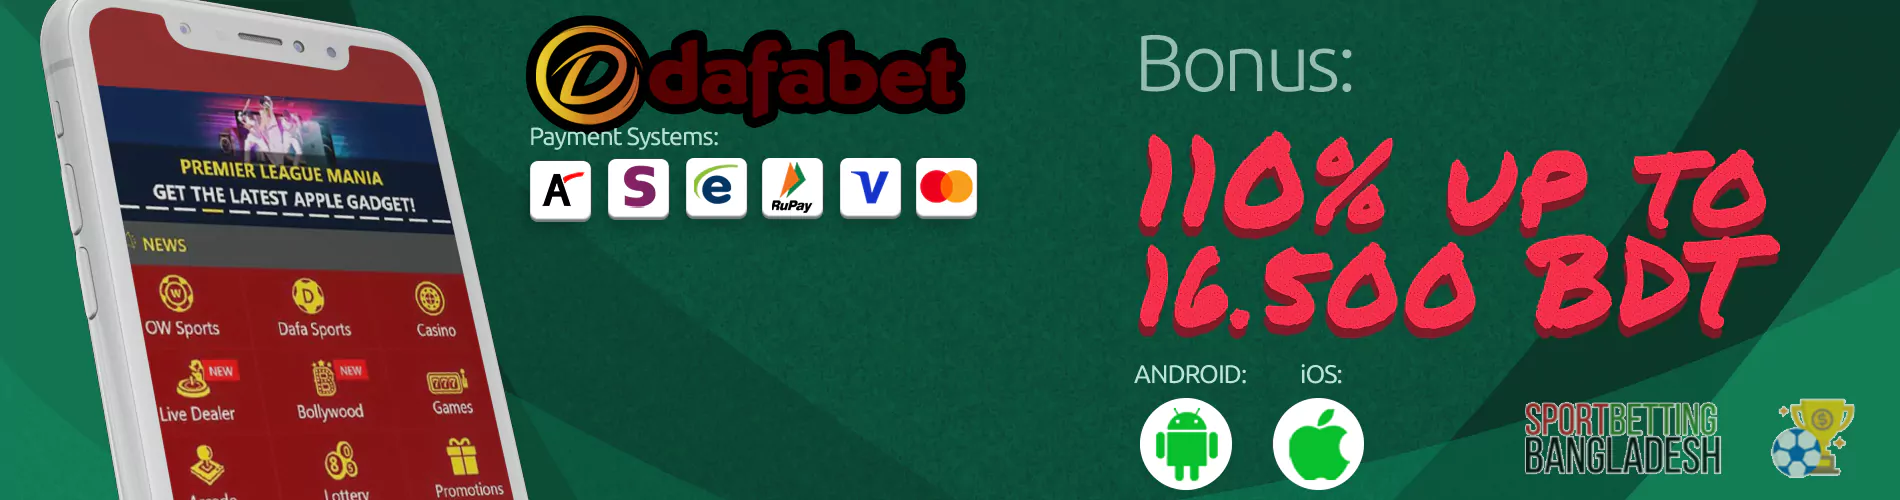 Dafabet Bangladesh app: payment systems, available platforms, welcome bonus.